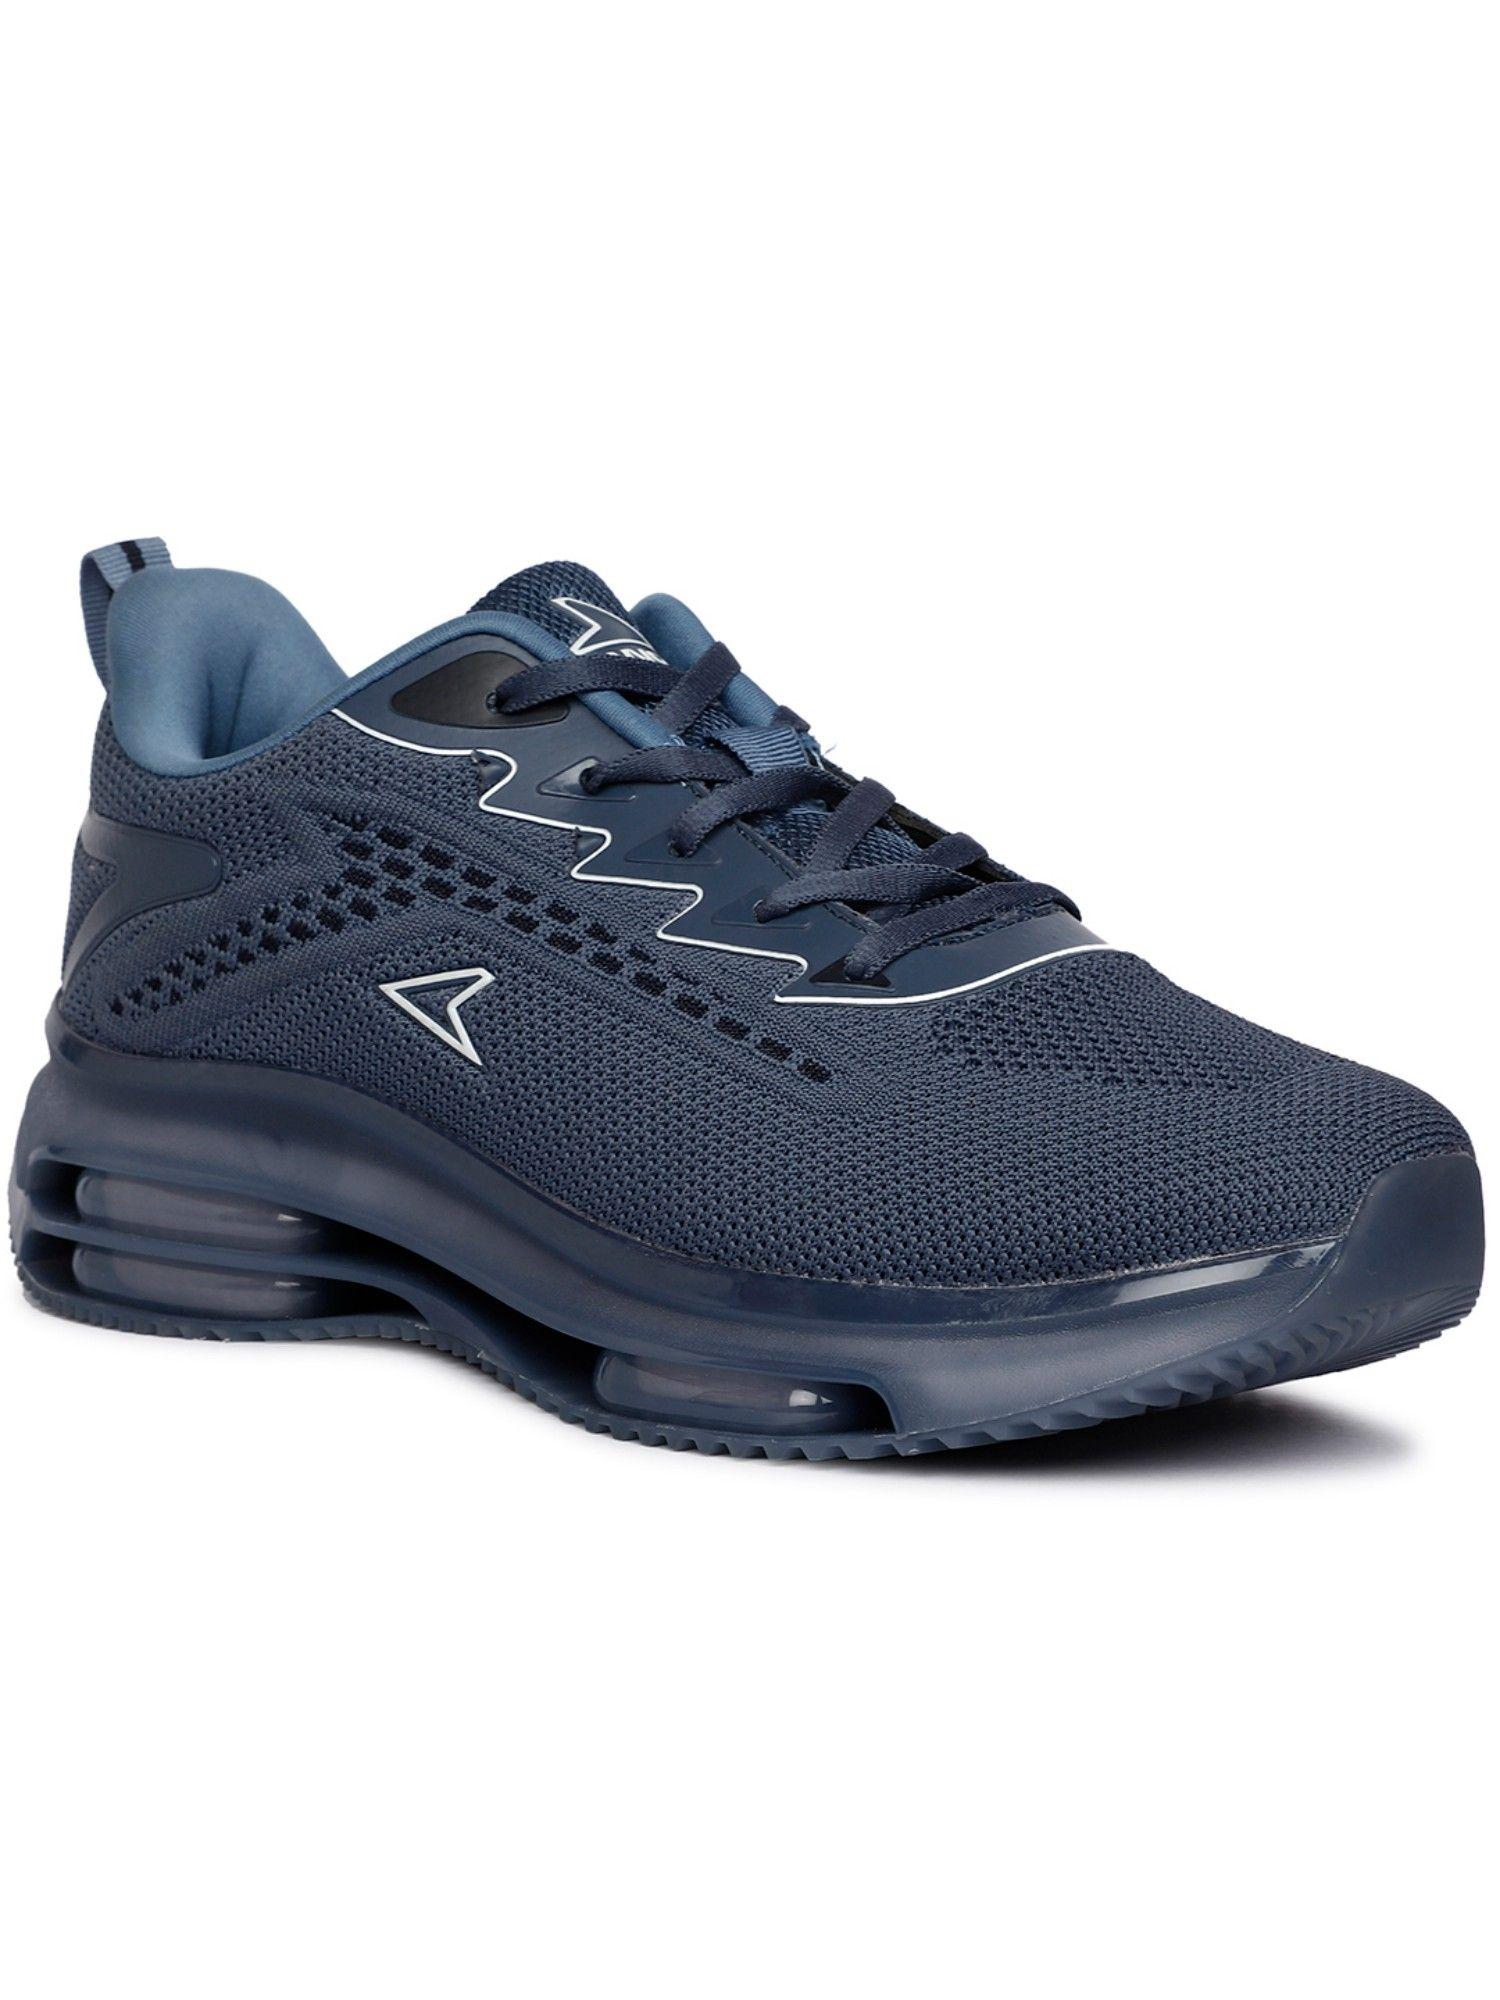 Crank Running Shoes for Men (Navy)